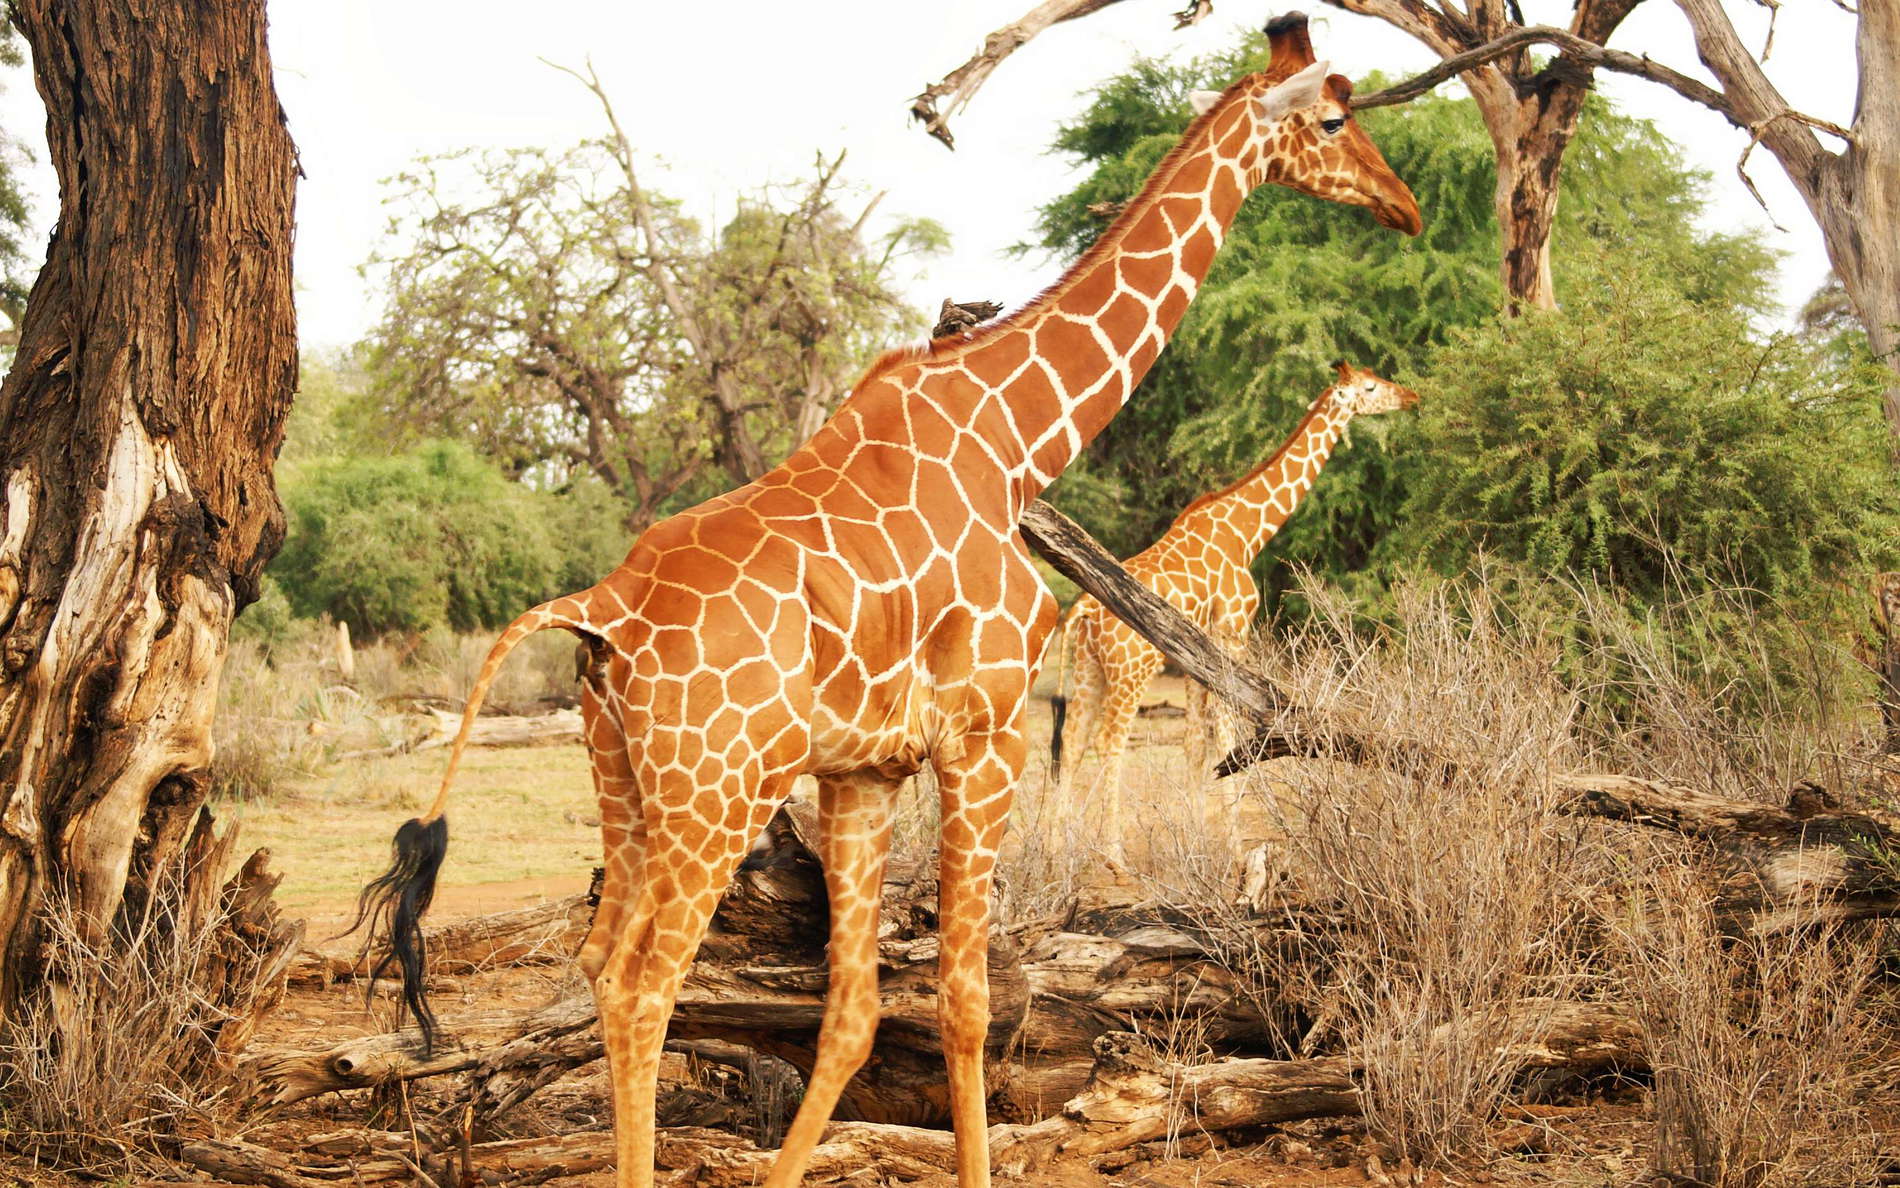 Samburu Buffalo Springs NR  |  Reticulated giraffes